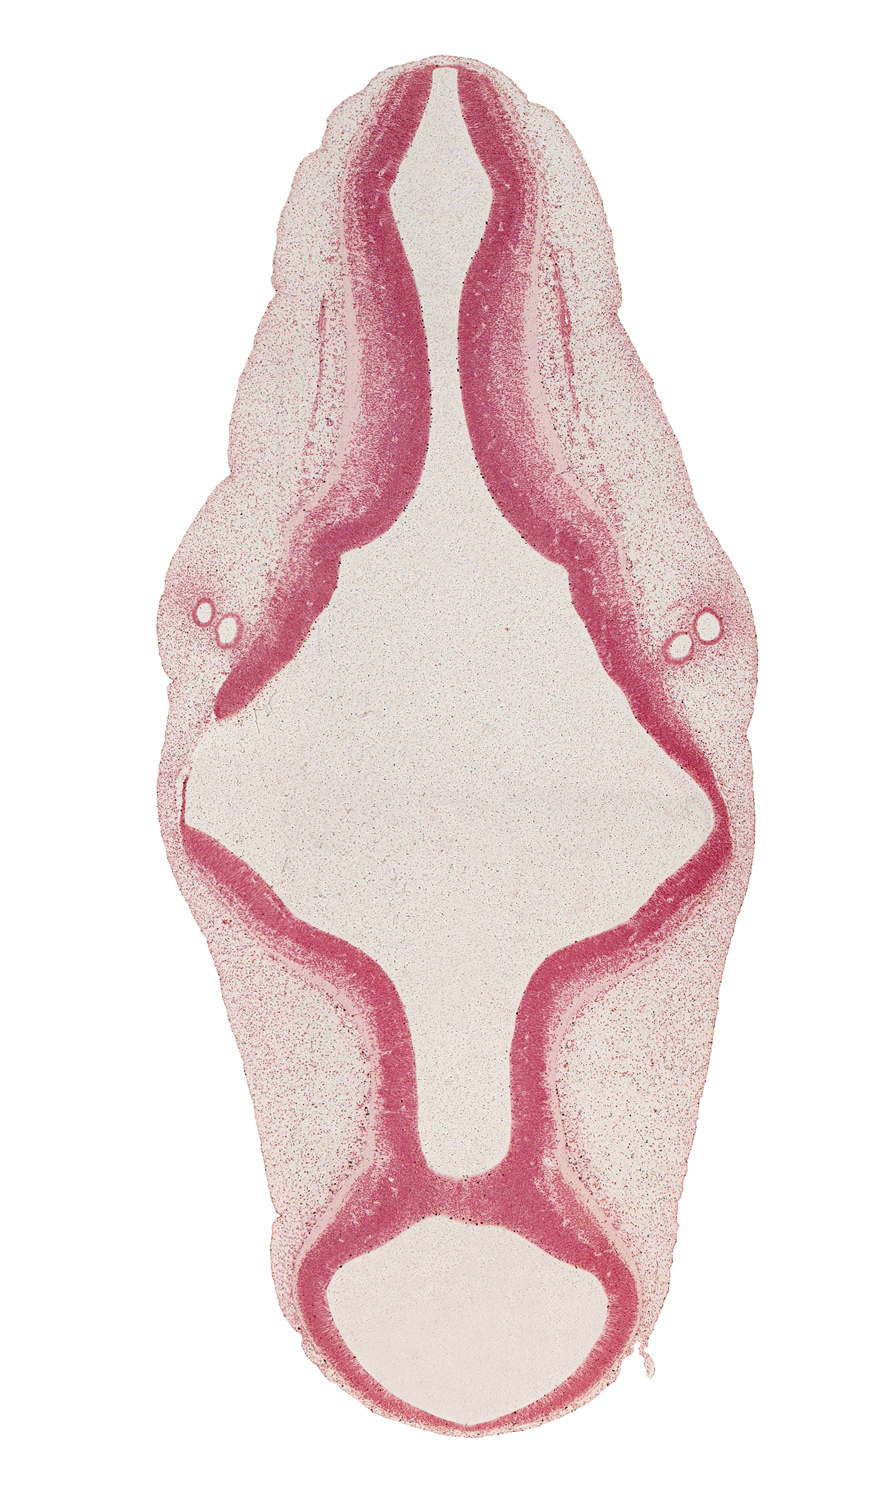 accessory nerve (CN XI), alar plate(s), artifact separation(s), basal plate, endolymphatic duct, intermediate zone, isthmus of rhombencephalon, marginal zone, mesencoel (cerebral aqueduct), rhombencoel (fourth ventricle), roof plate, sulcus limitans, vascular plexus, ventricular zone, vestibular part of otic vesicle